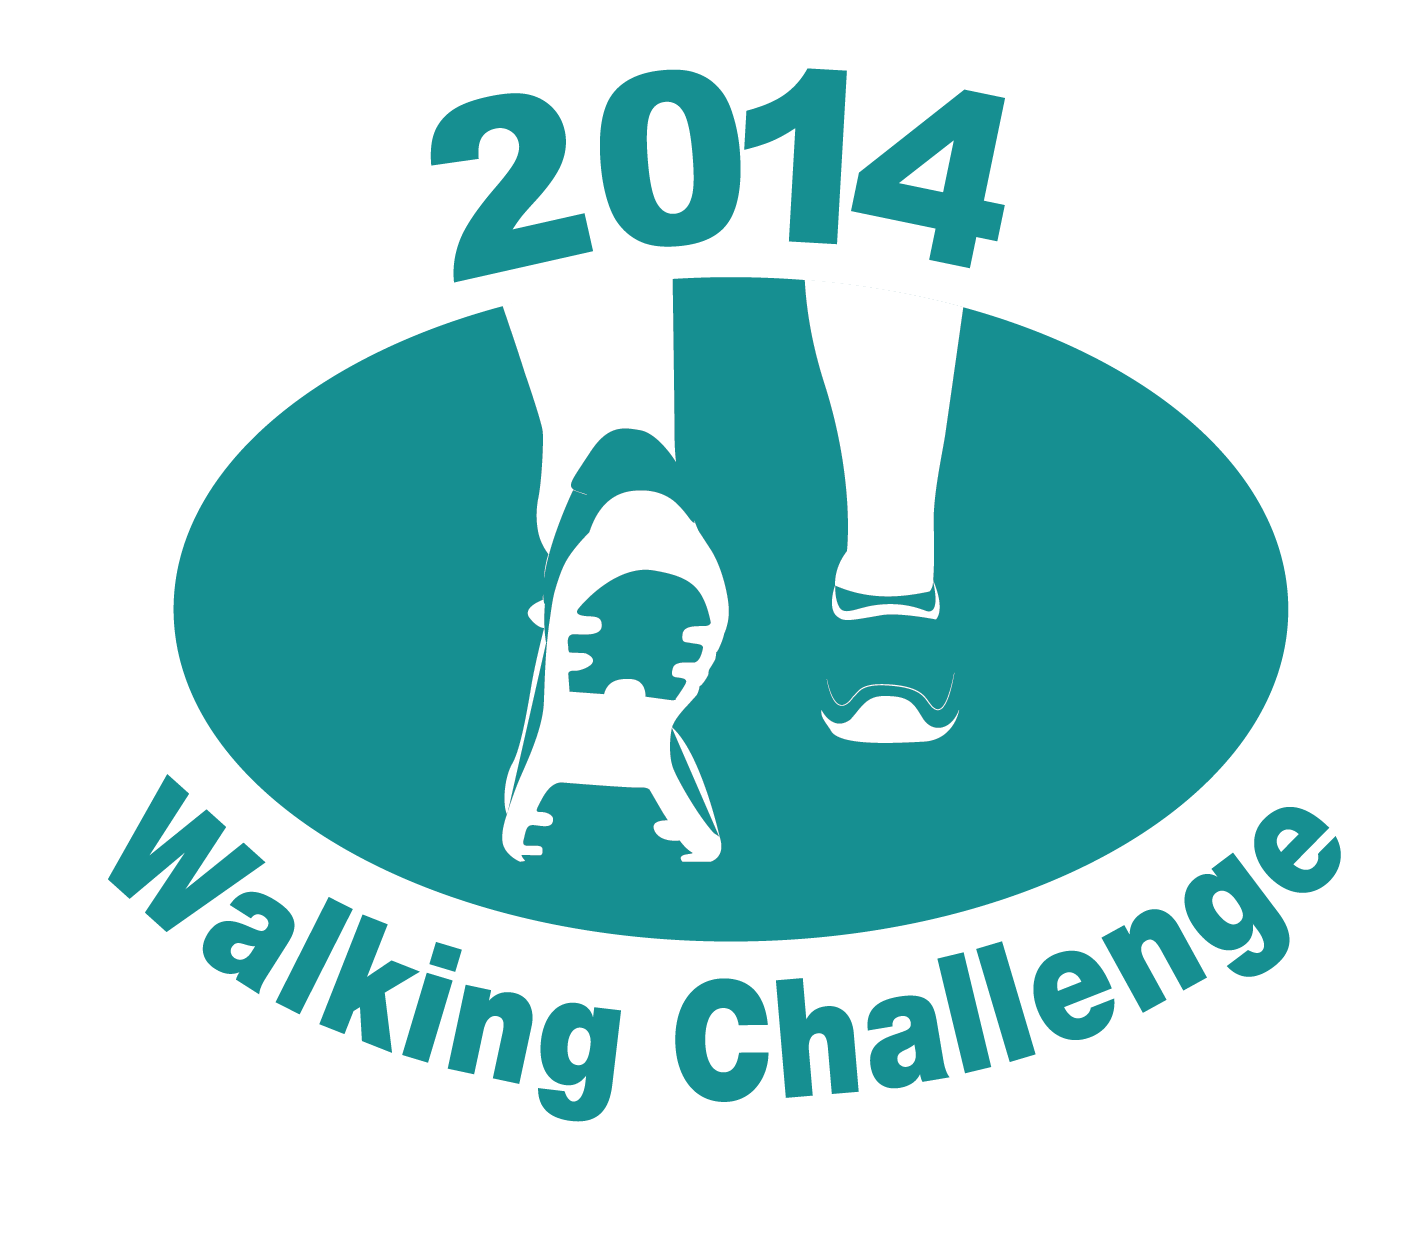 Walking challenge - Civil Service Local